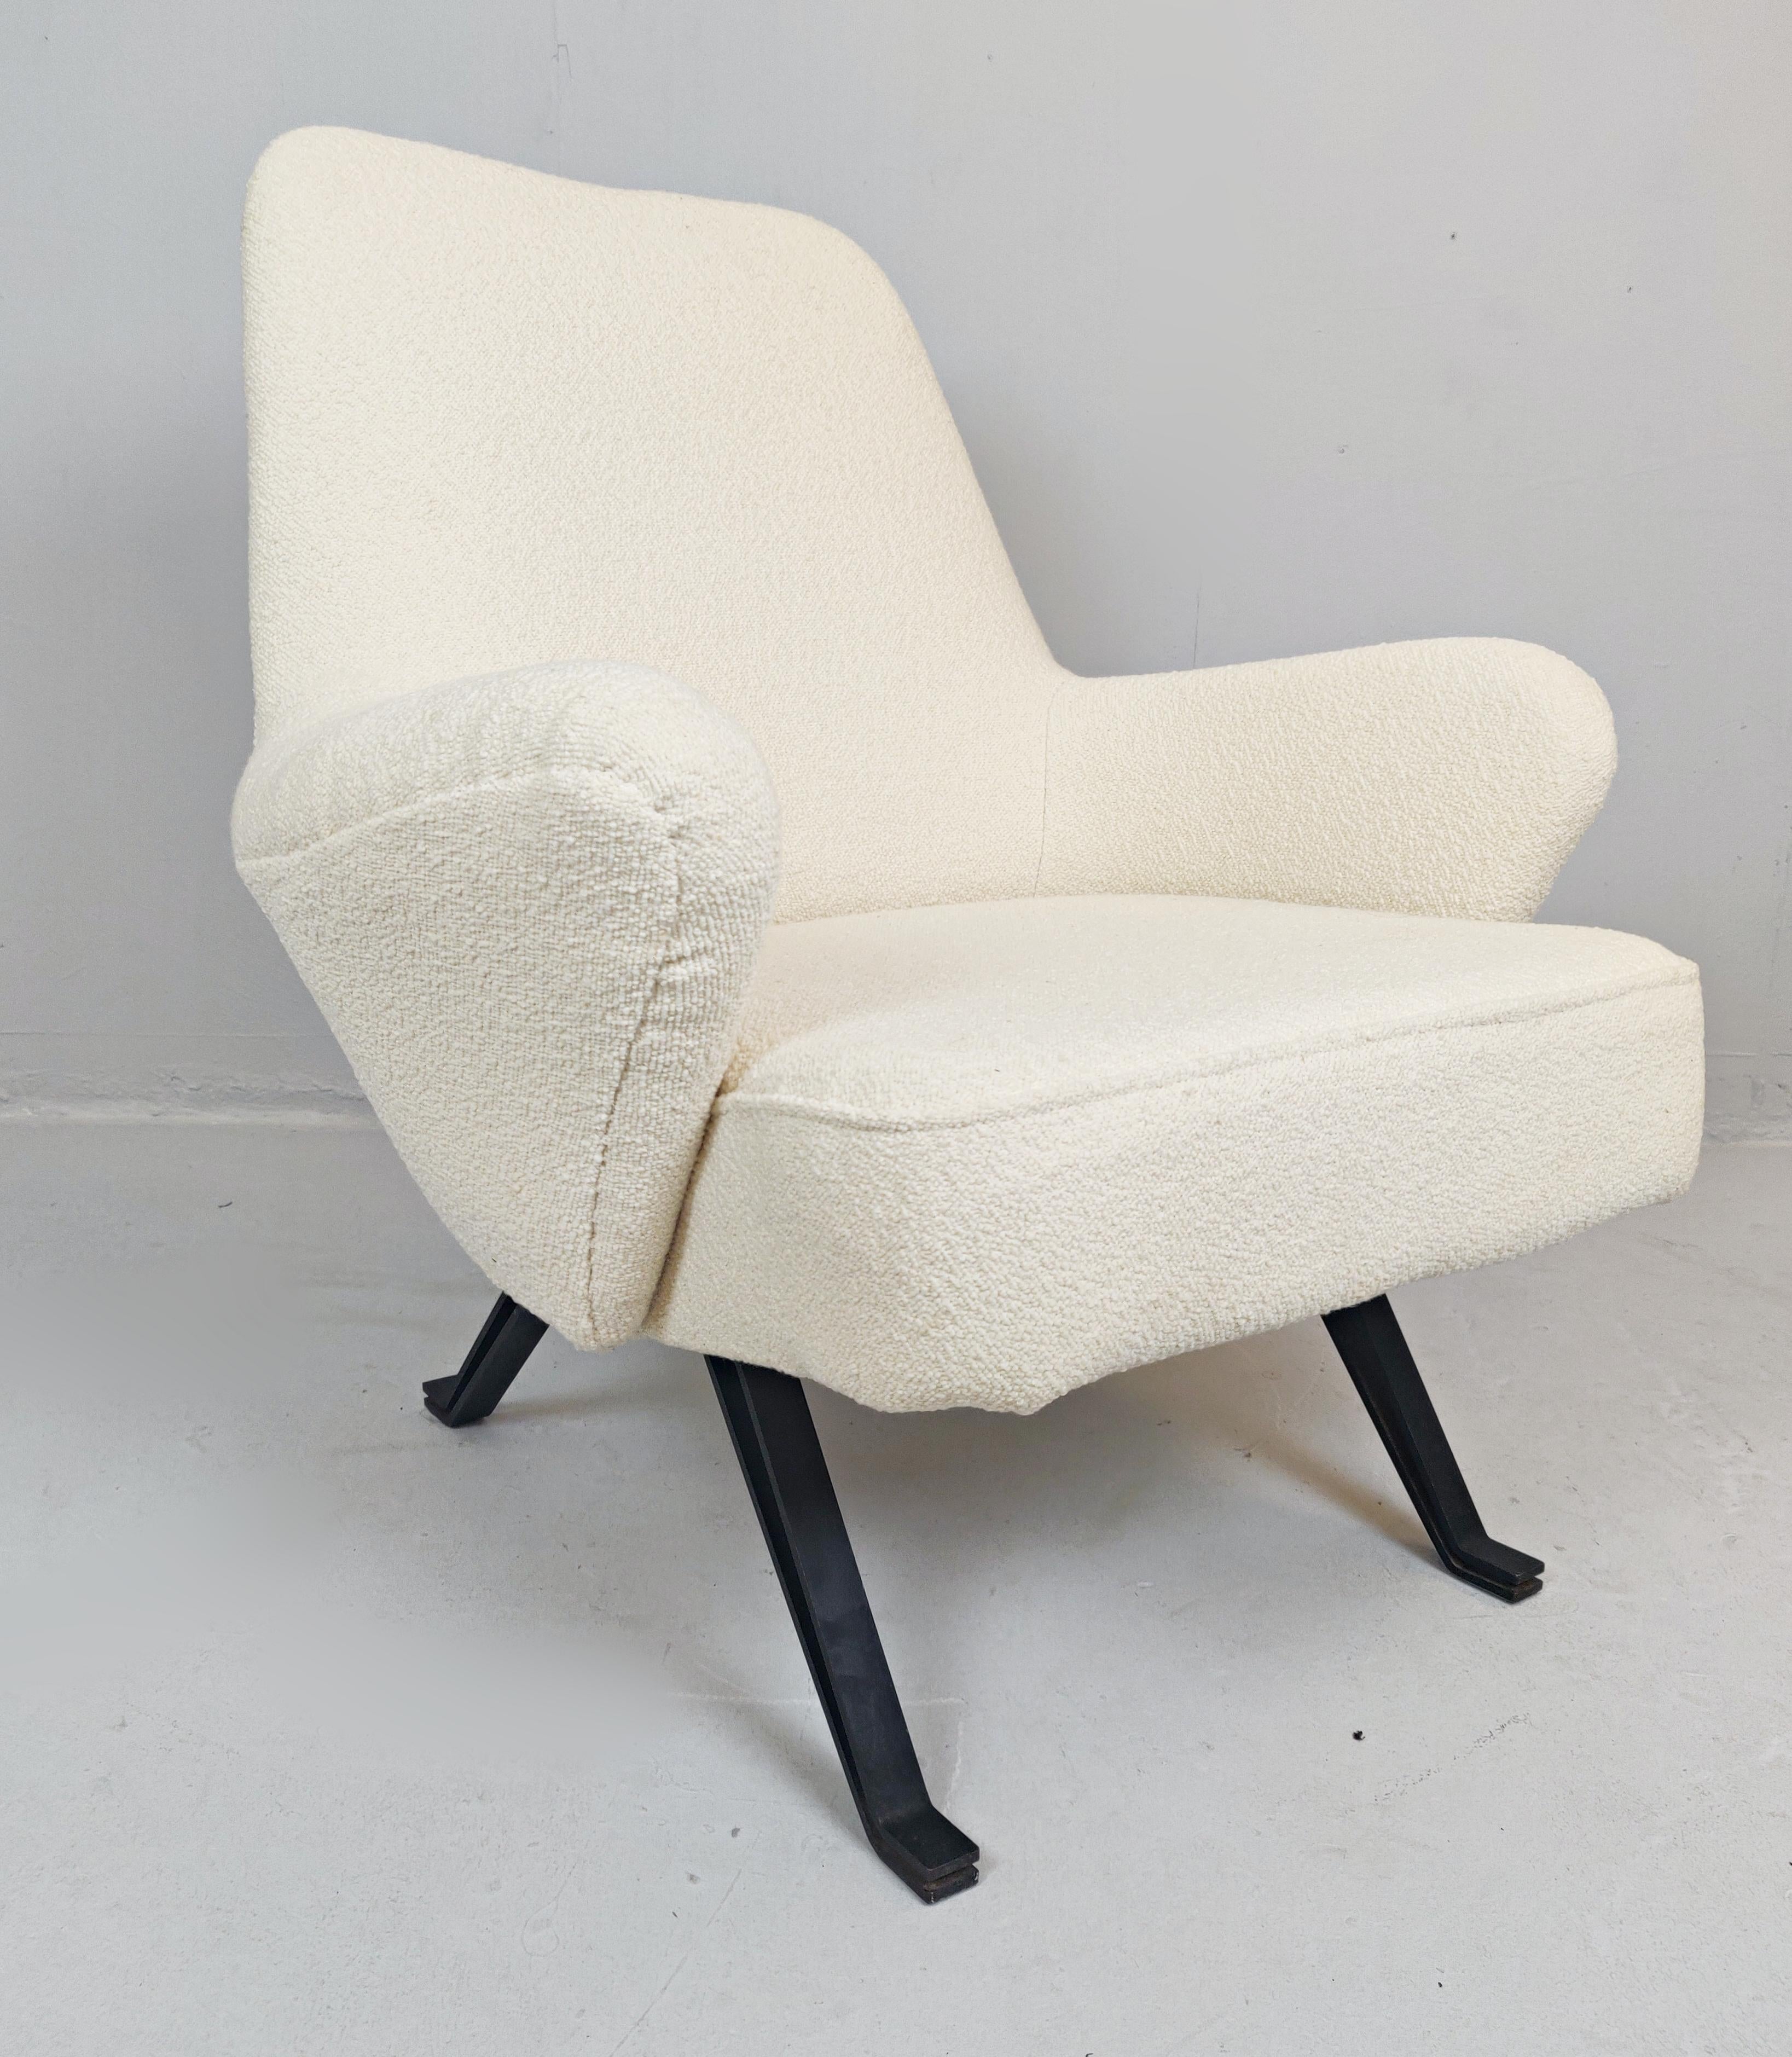 Italian armchair by Formanova, new upholstery.